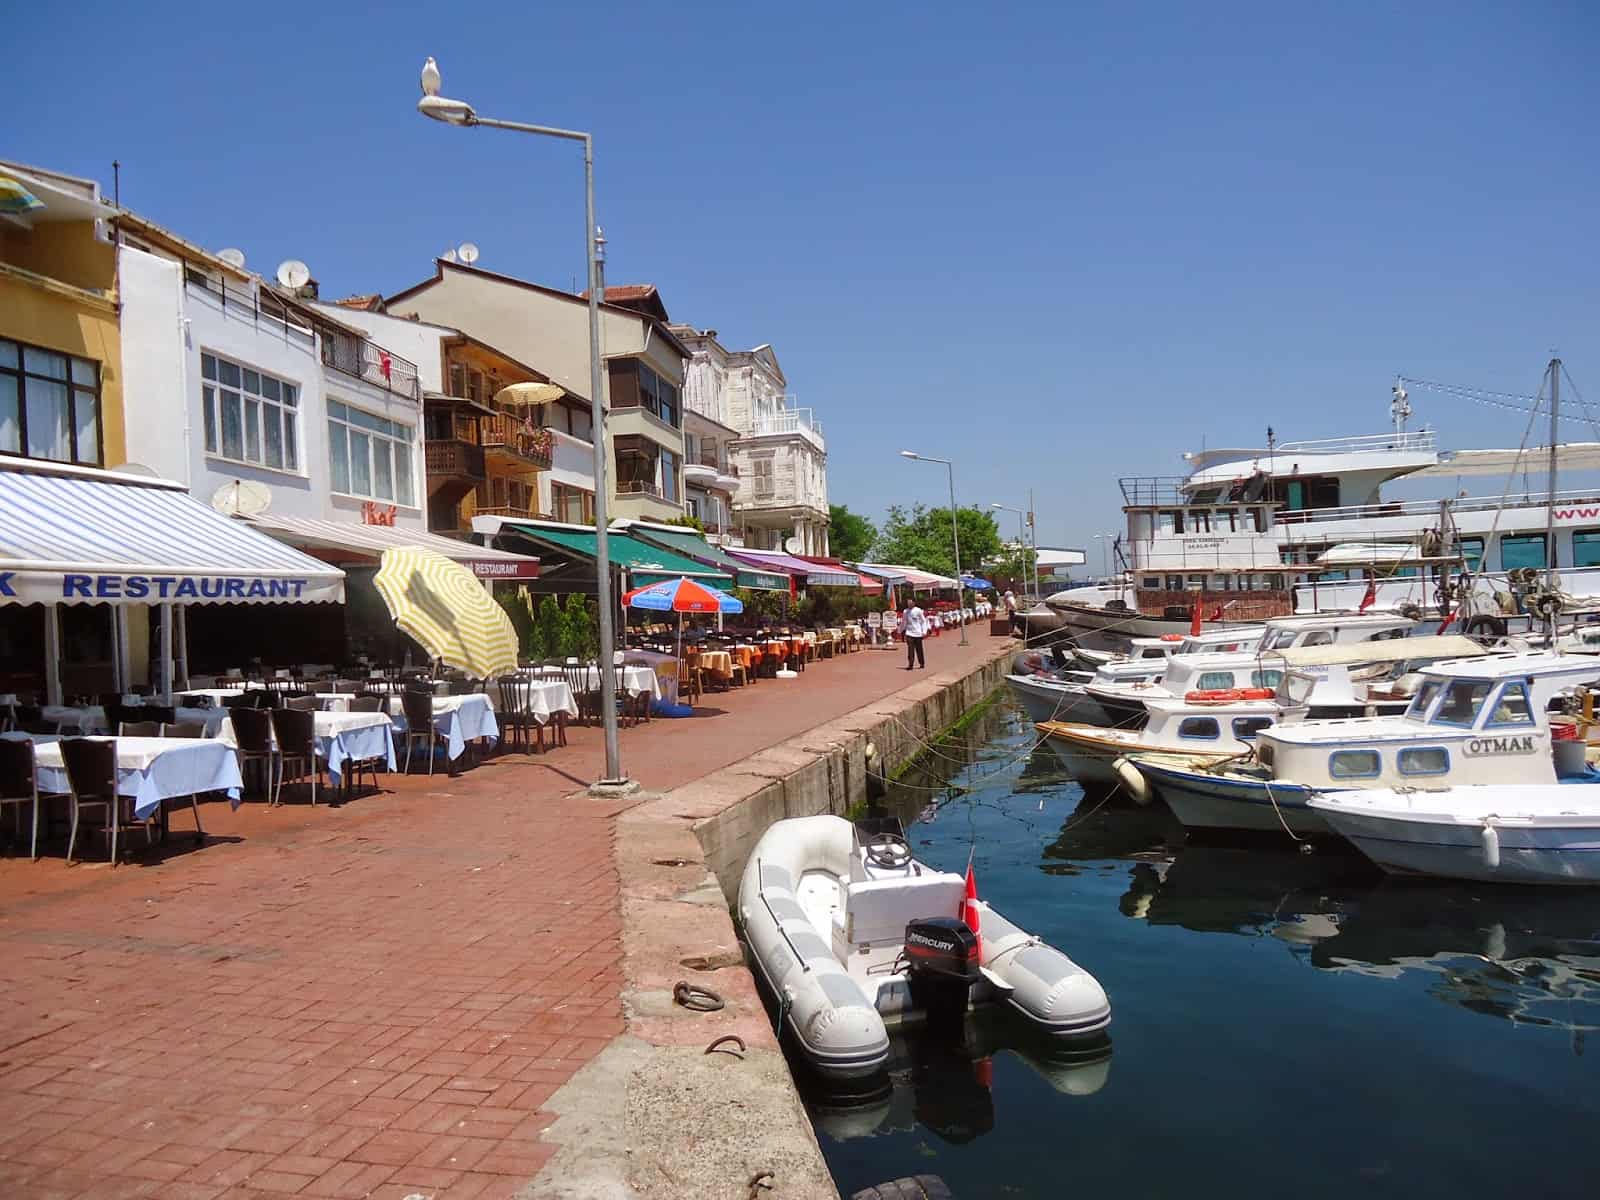 Fish restaurants on Burgazada, Princes' Islands, Istanbul, Turkey